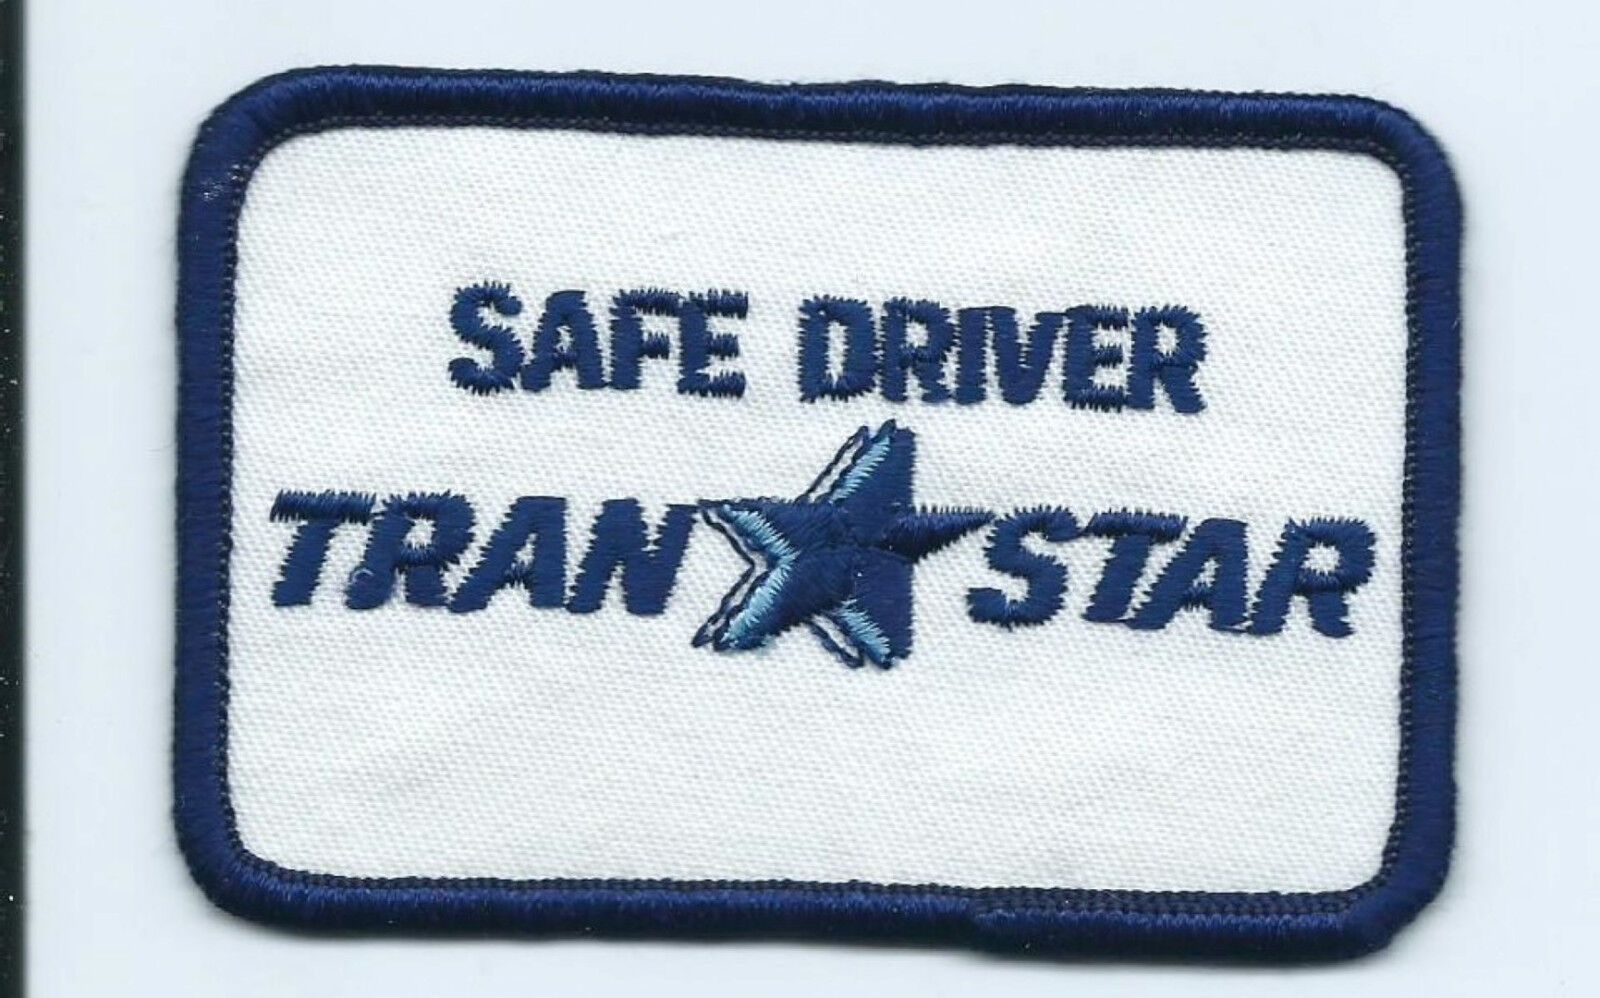 Tran Star safe driver patch 2-1/2 X 3-7/8 #1193